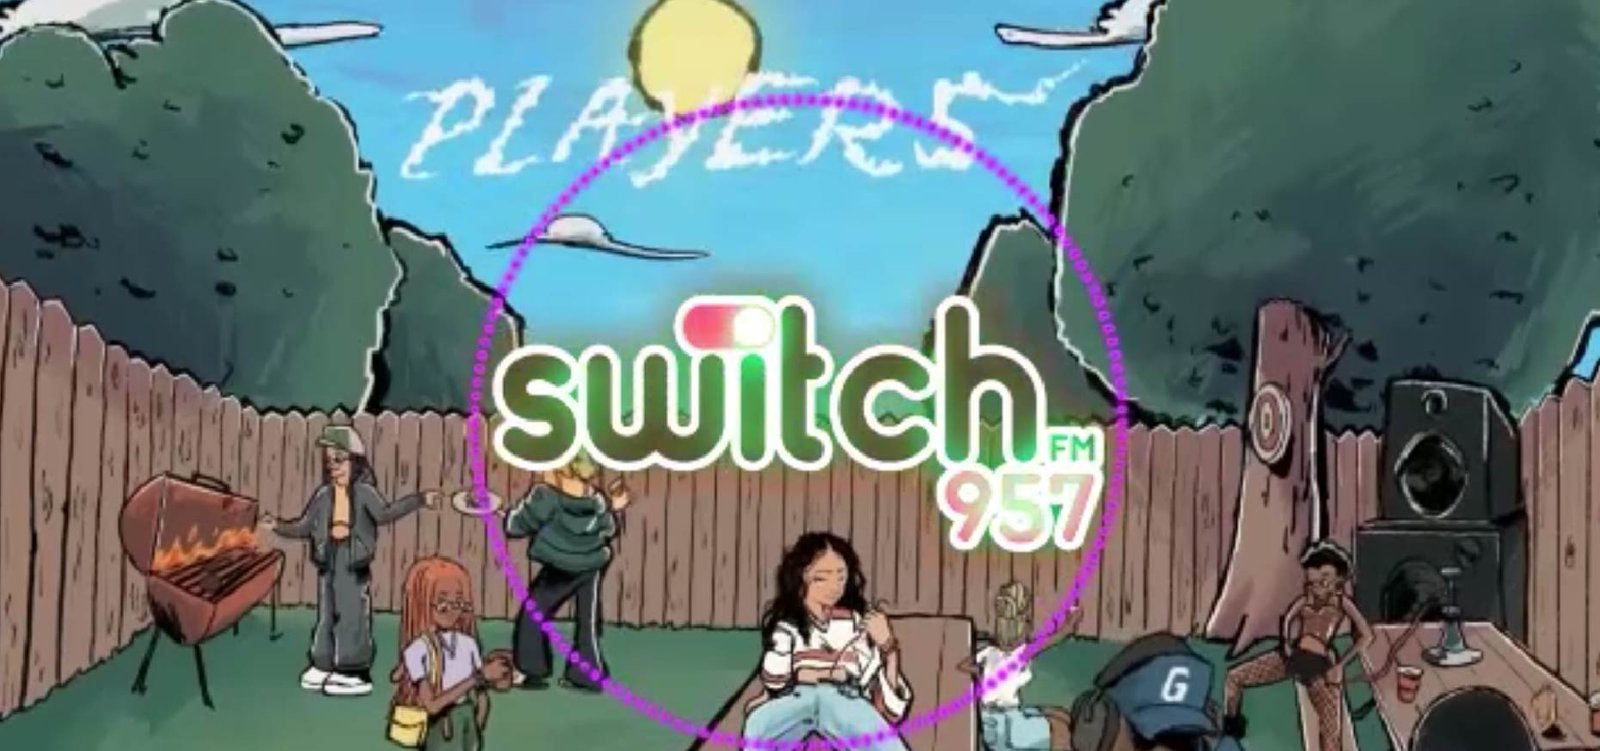 Coi Leray – Players (Switch FM Speed Intro)